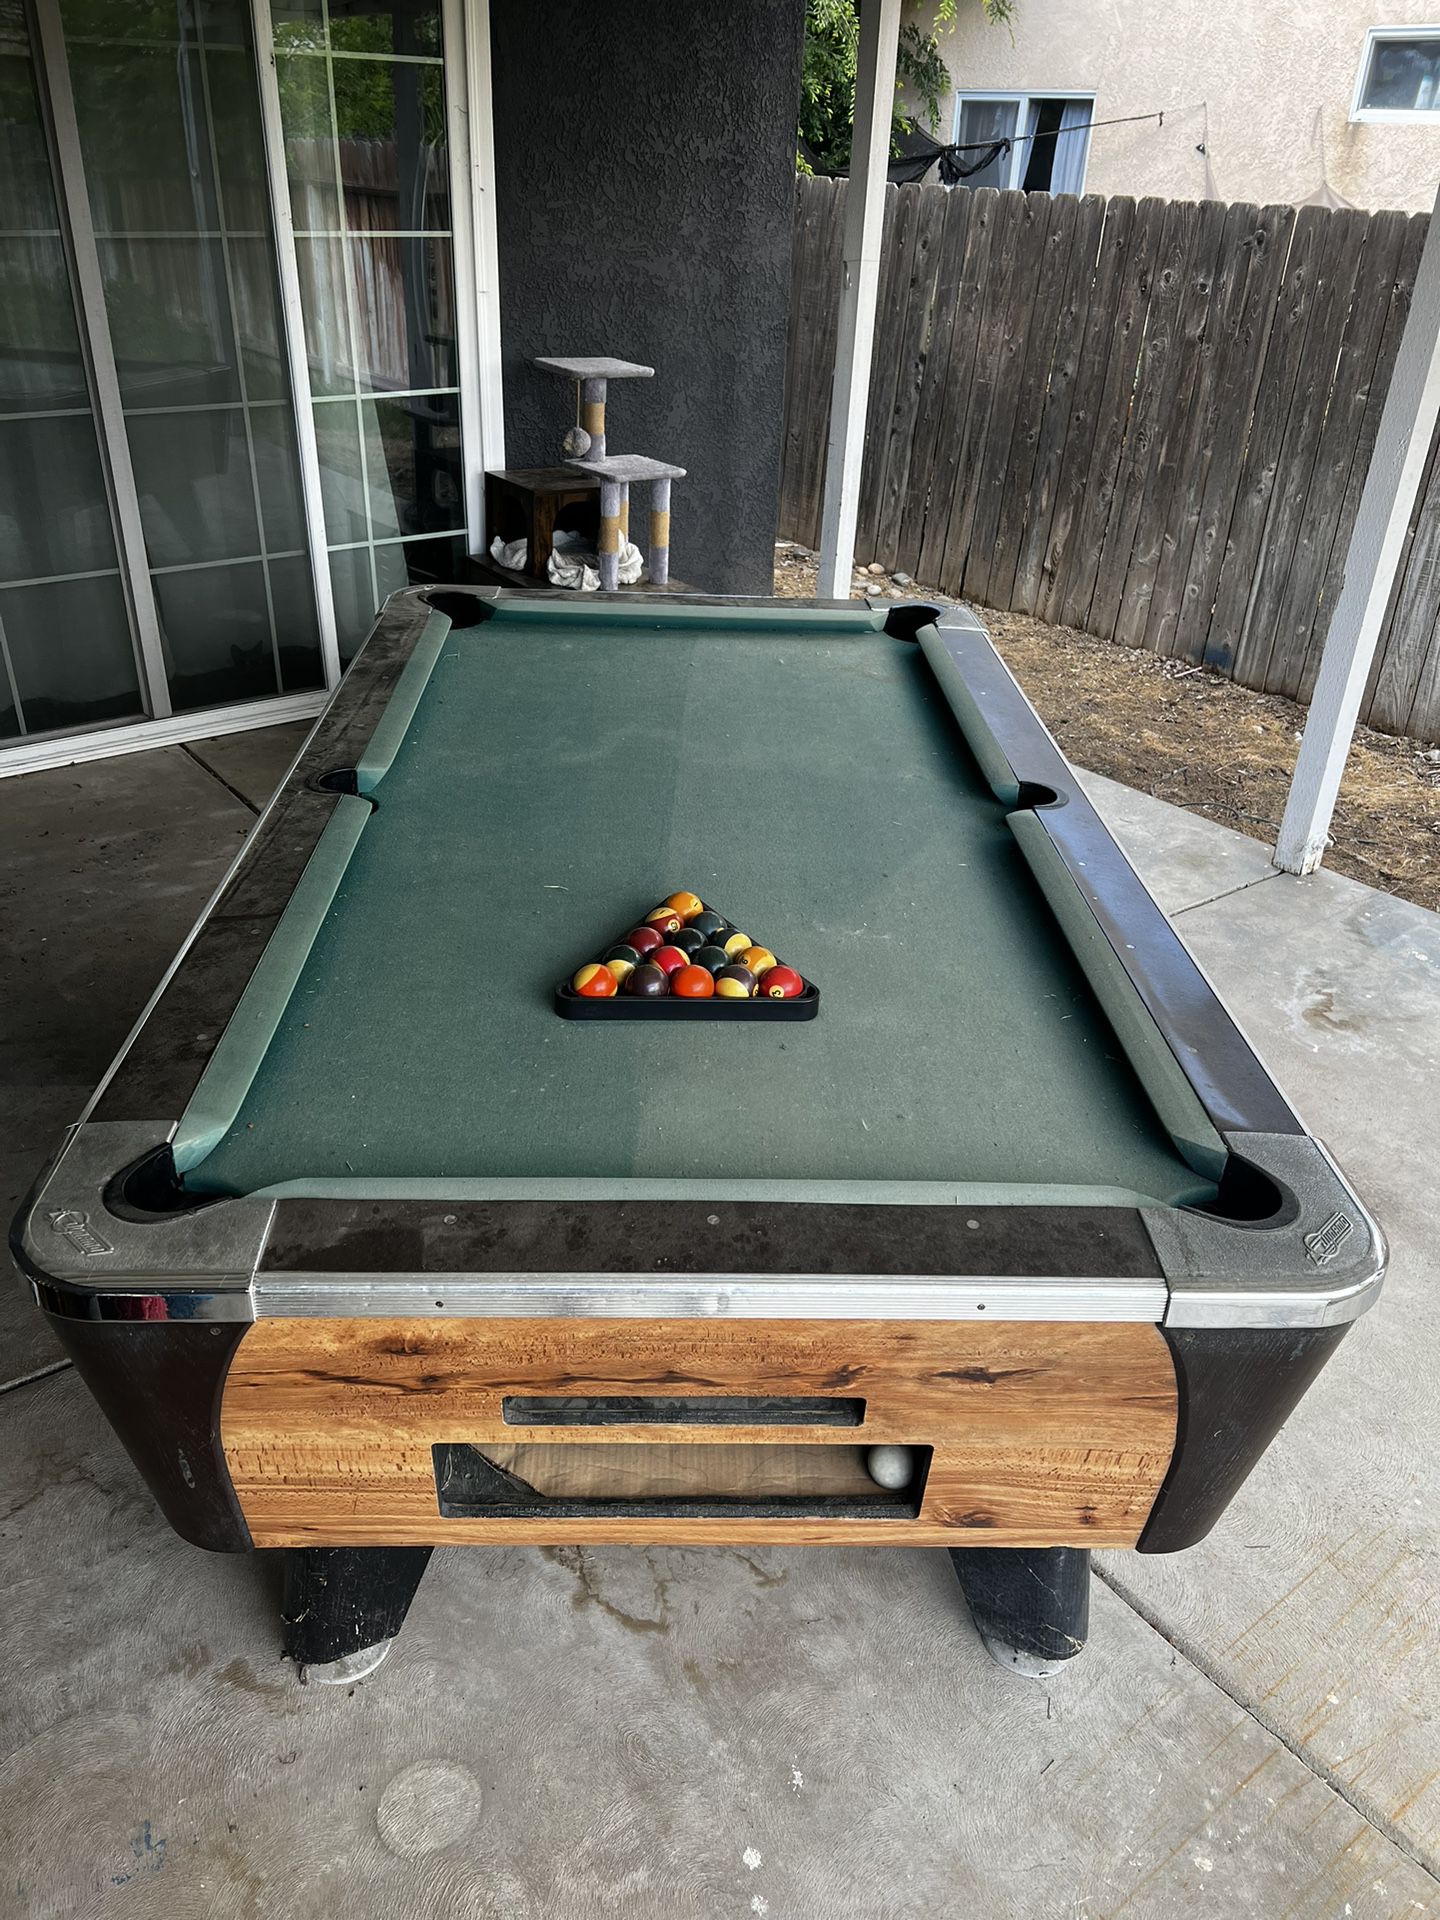 Dynamo Pool Table And Sports Craft Dart Board